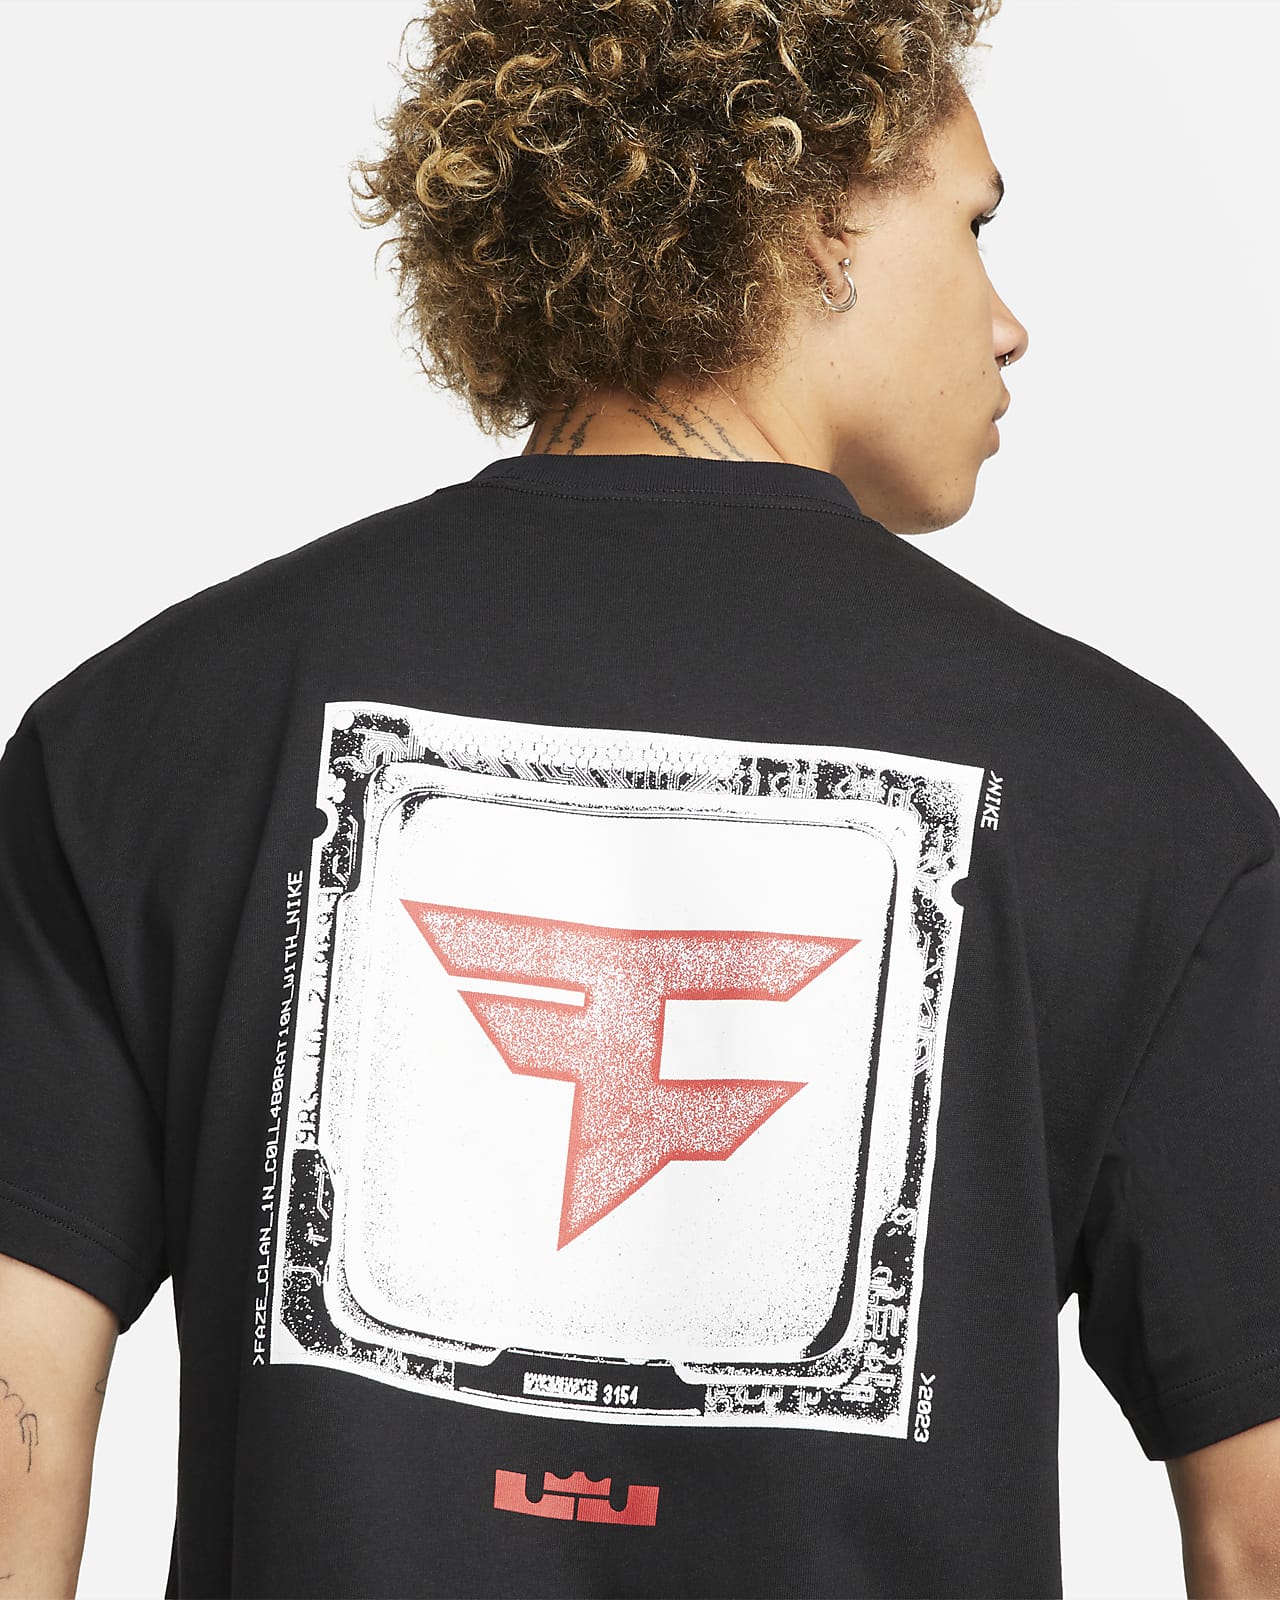 LeBron x FaZe Clan Men's T-Shirt.